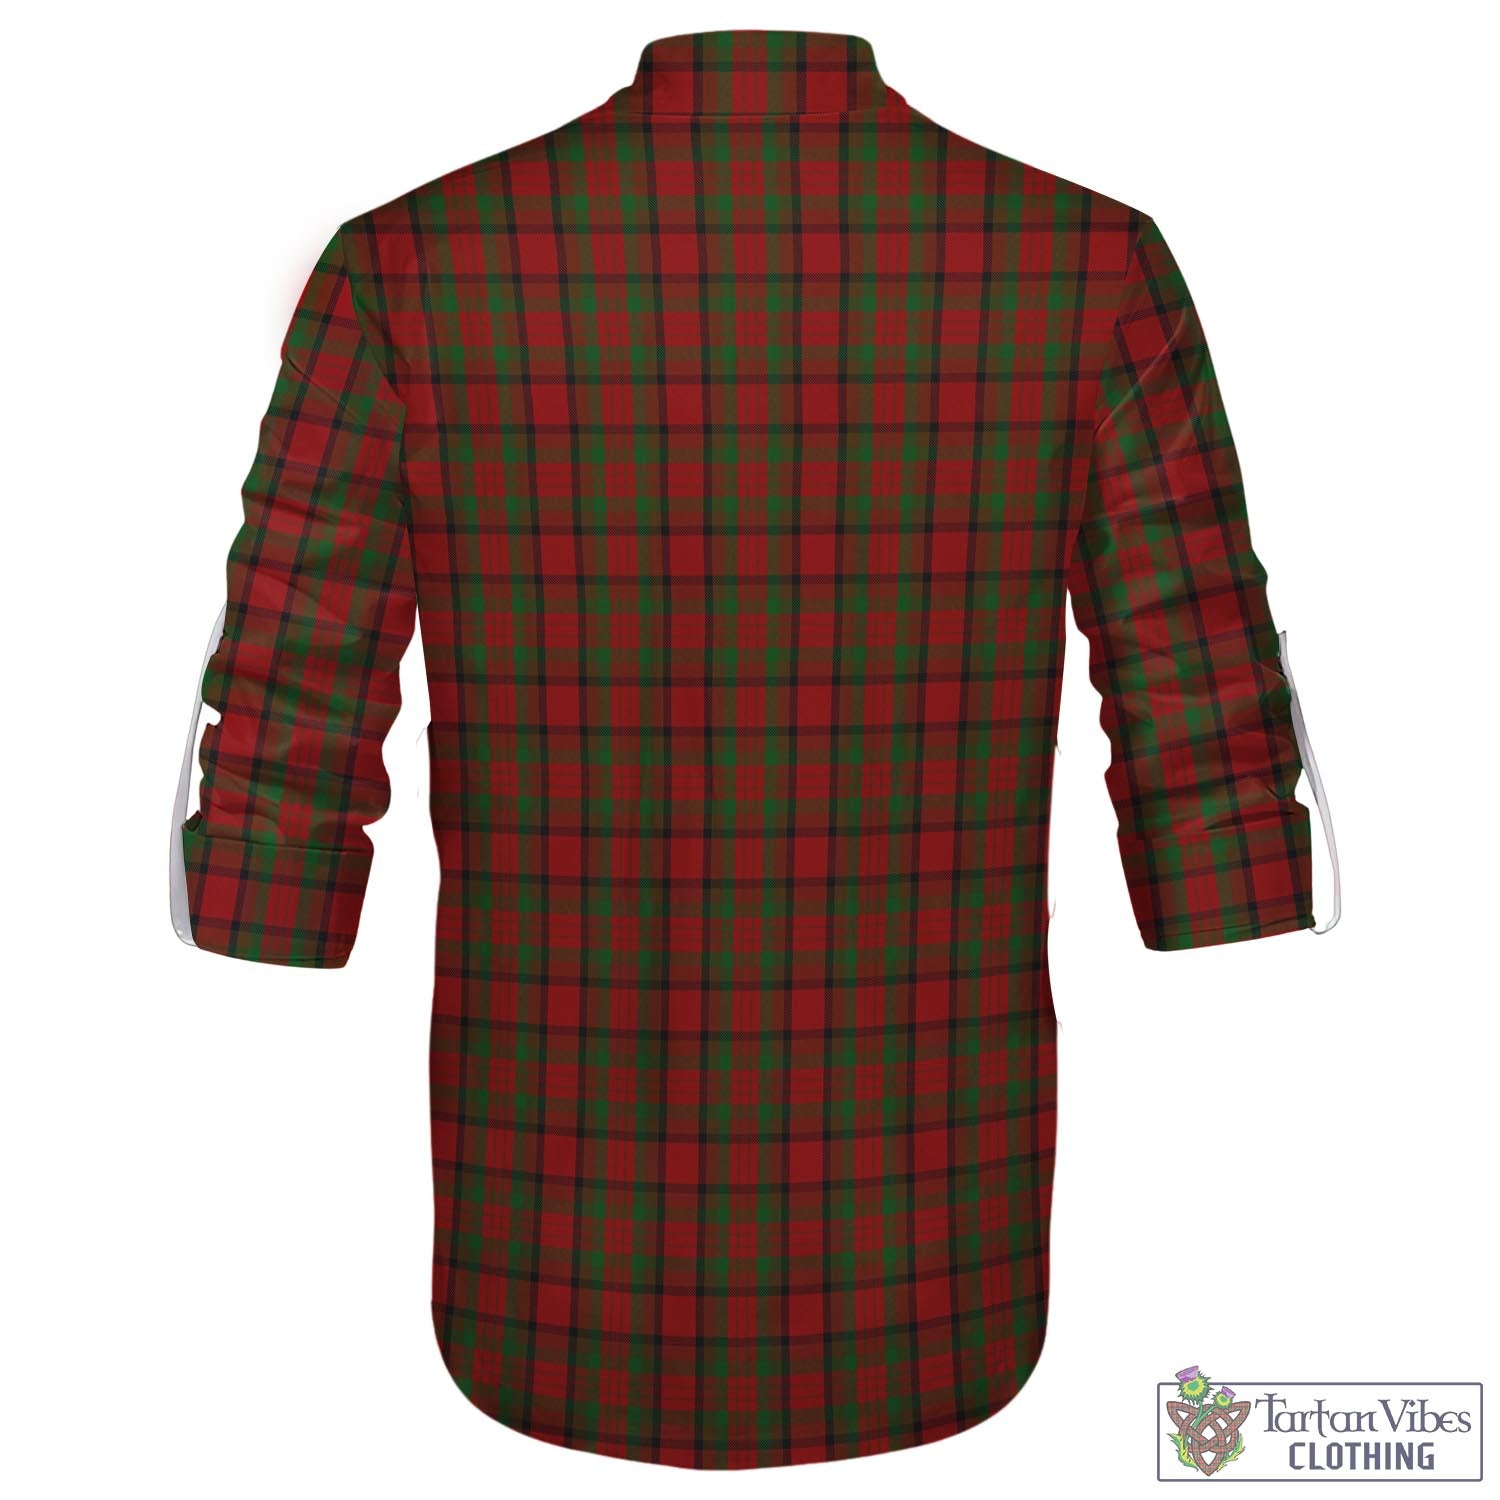 Tartan Vibes Clothing Tipperary County Ireland Tartan Men's Scottish Traditional Jacobite Ghillie Kilt Shirt